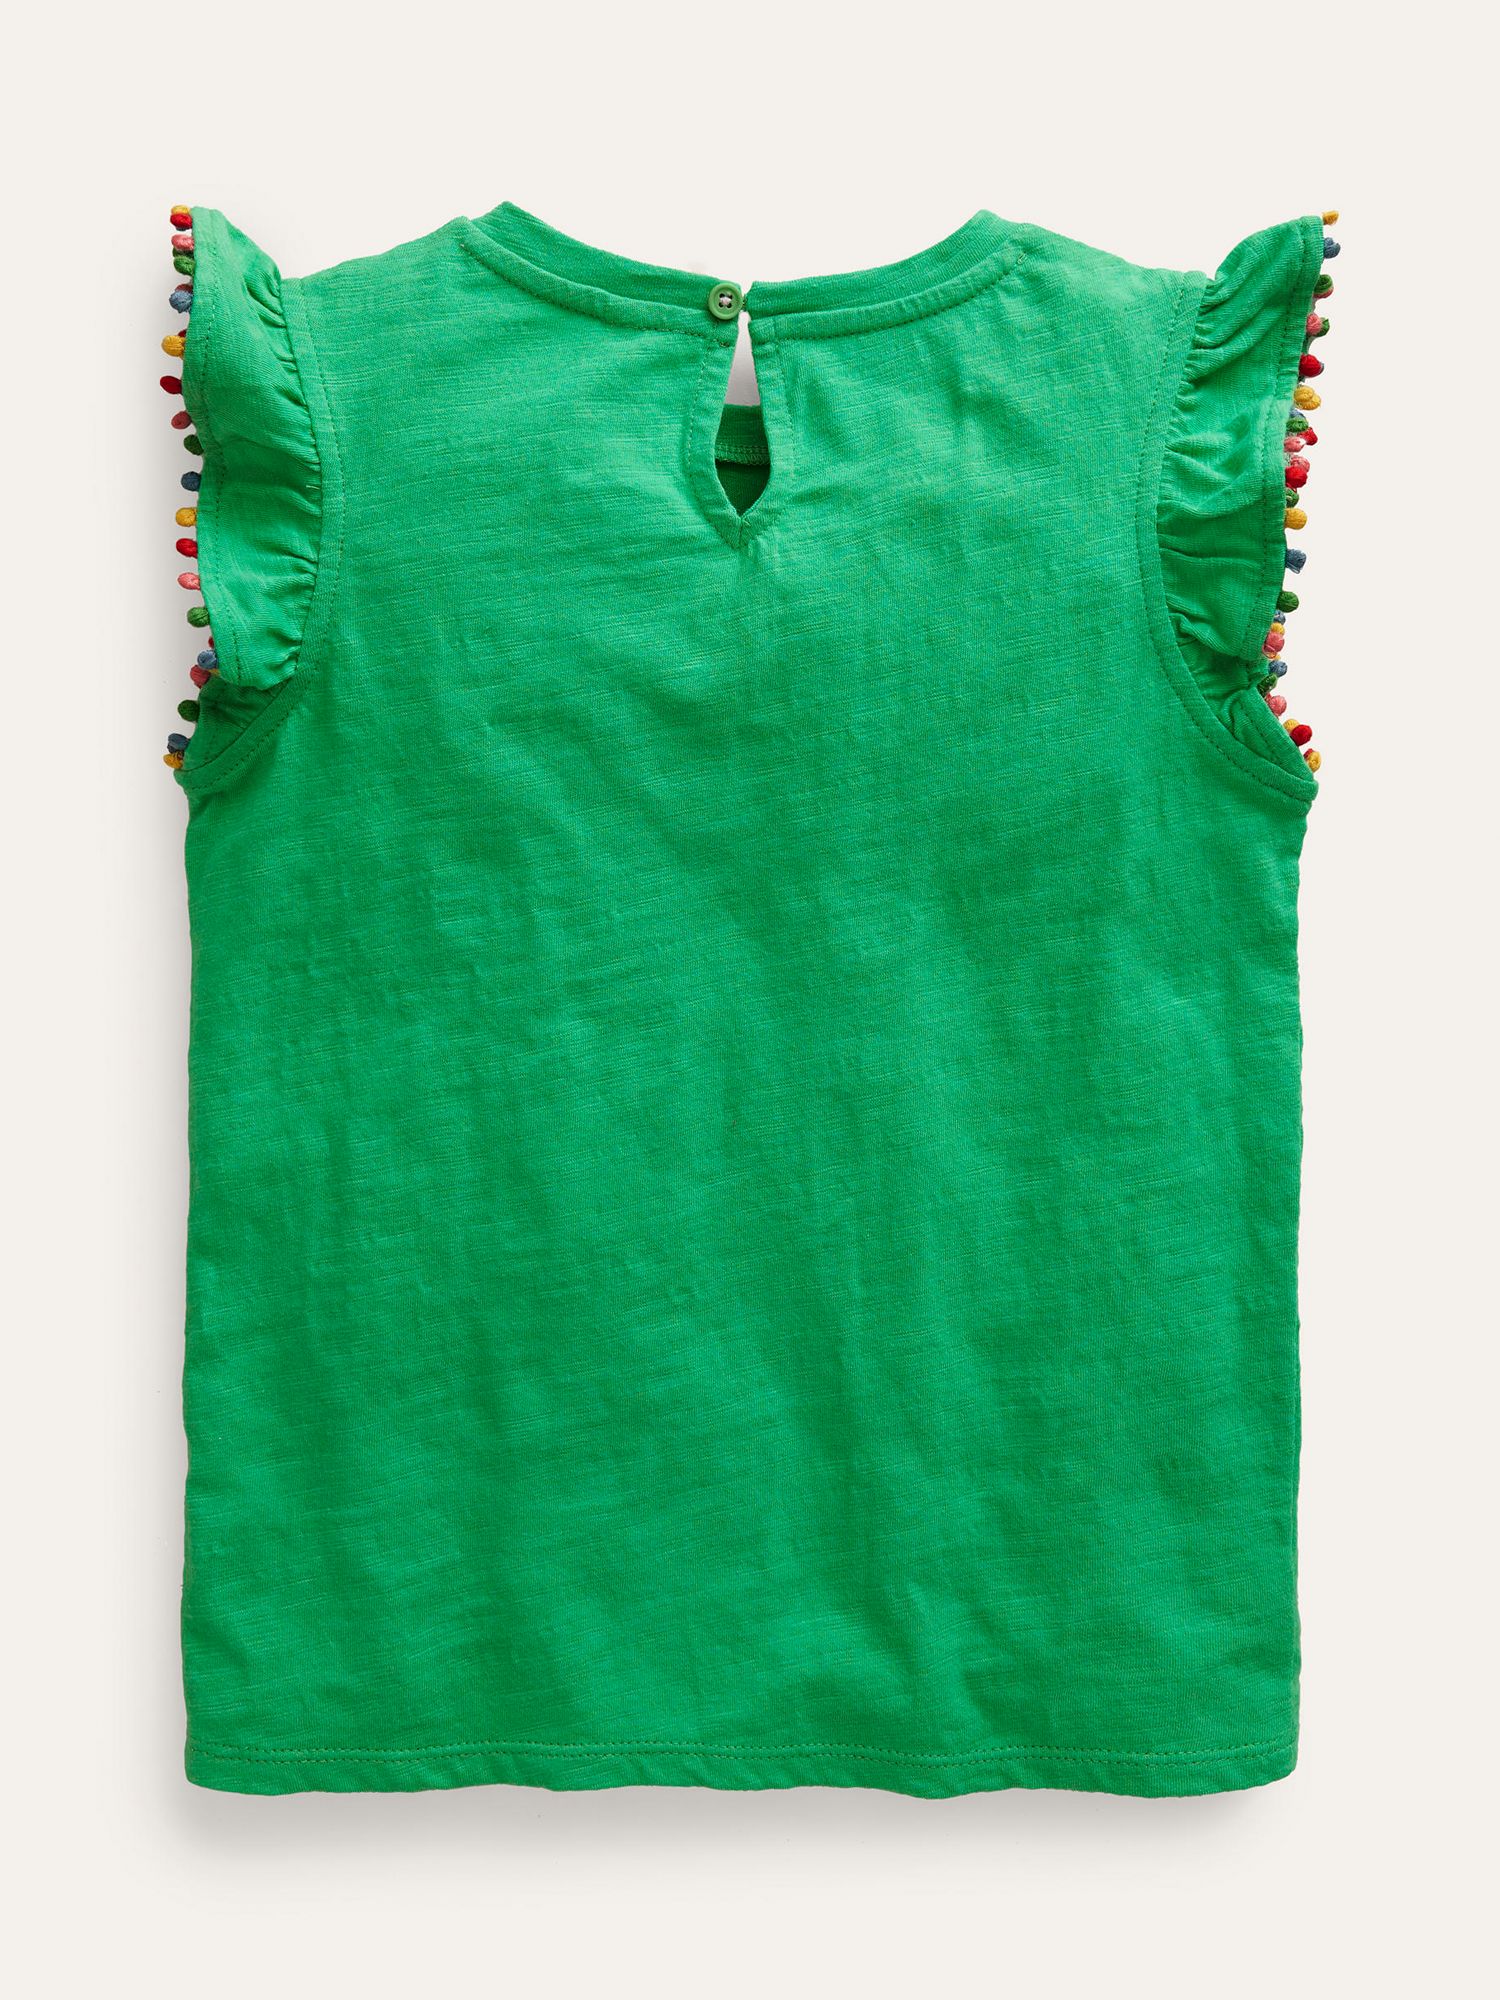 Mini Boden Kids' Pom Pom Trim T-Shirt, Pea Green, 2-3 years